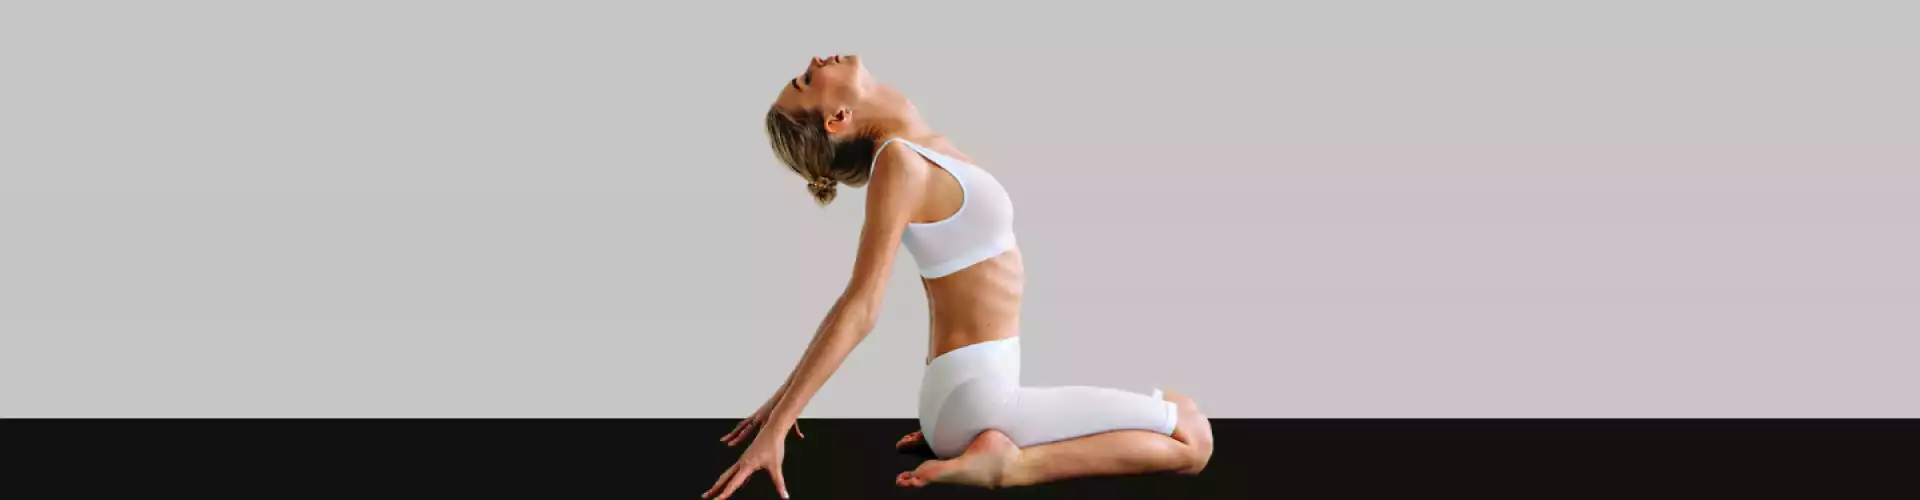 Relajación a través de la respiración - Yoga restaurativo